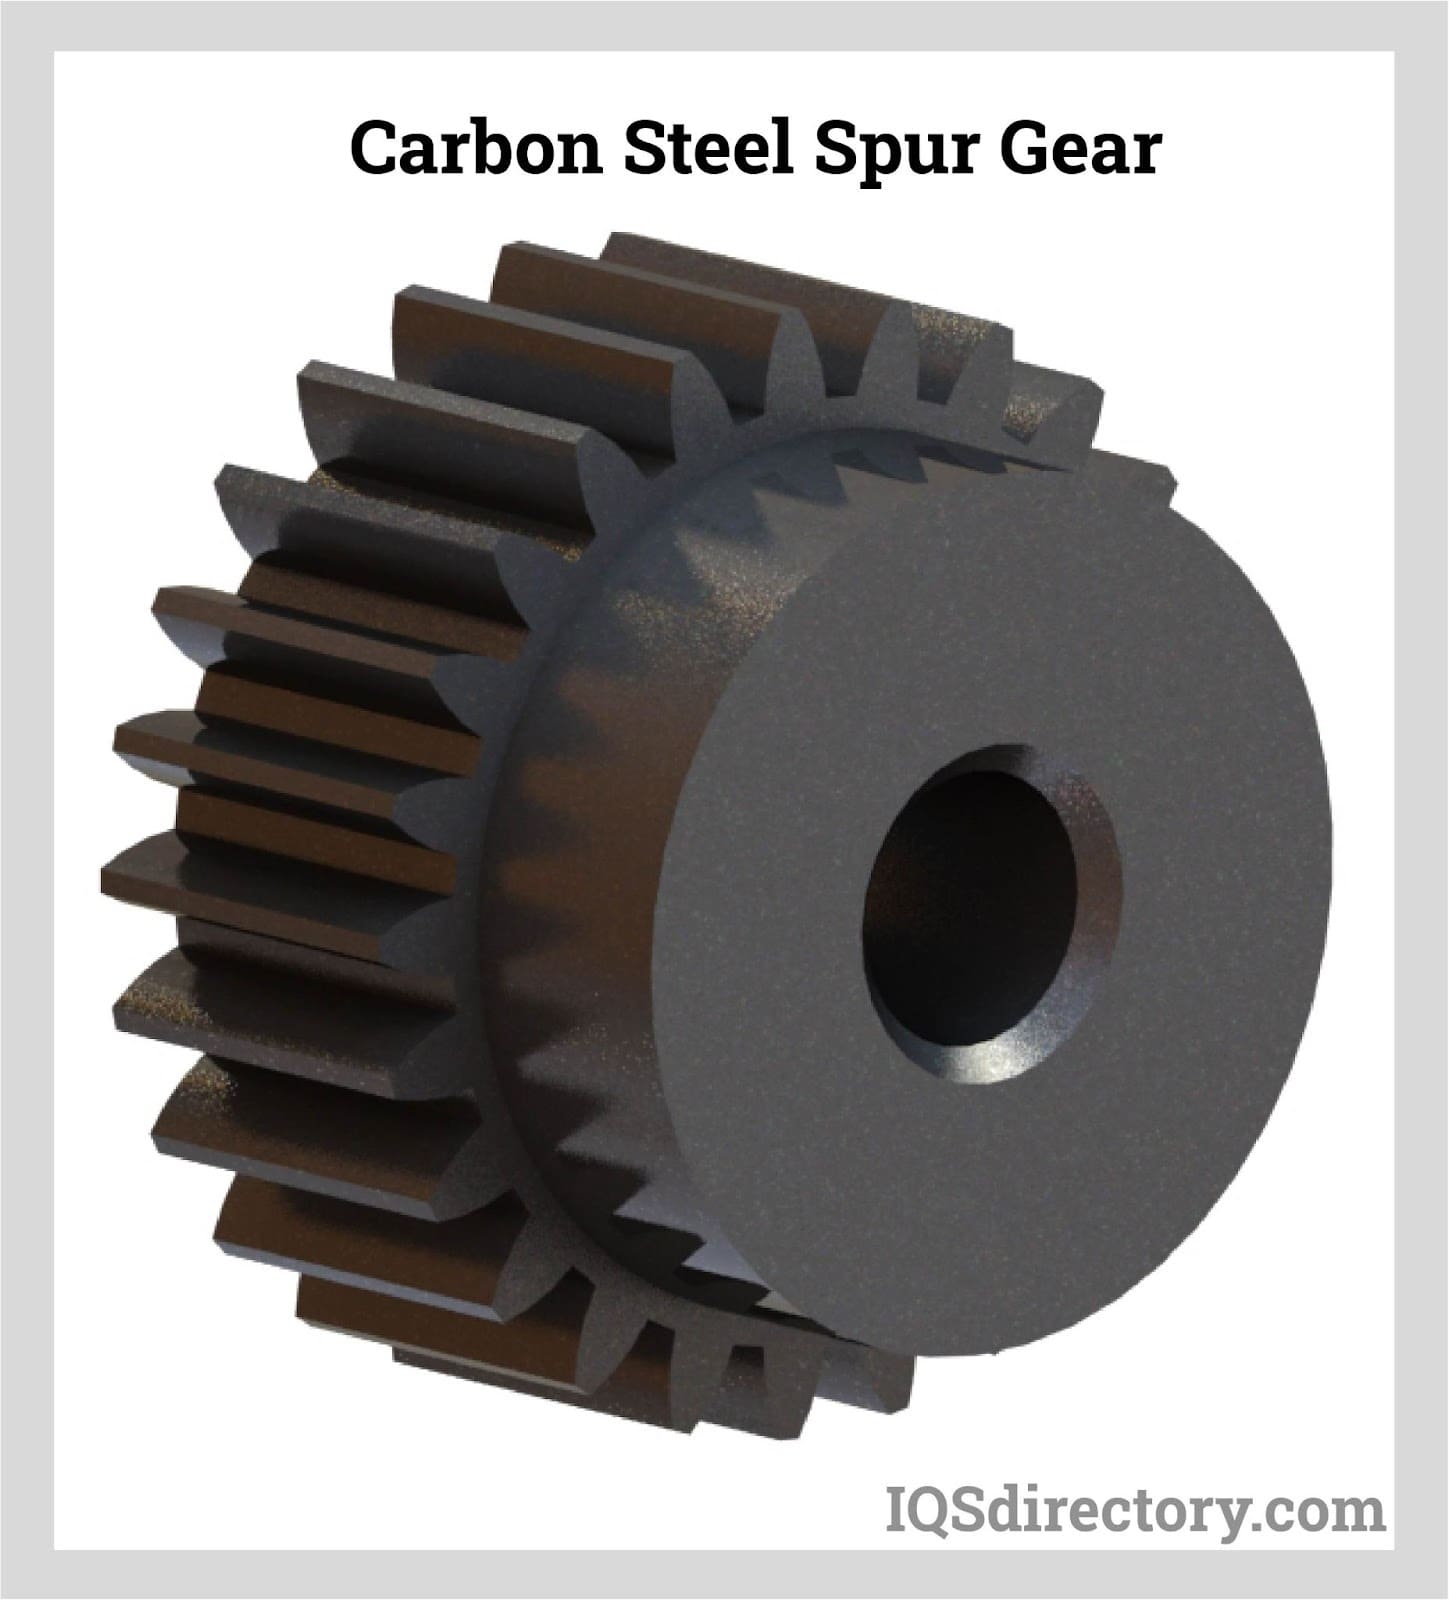 Carbon Steel Spur Gear